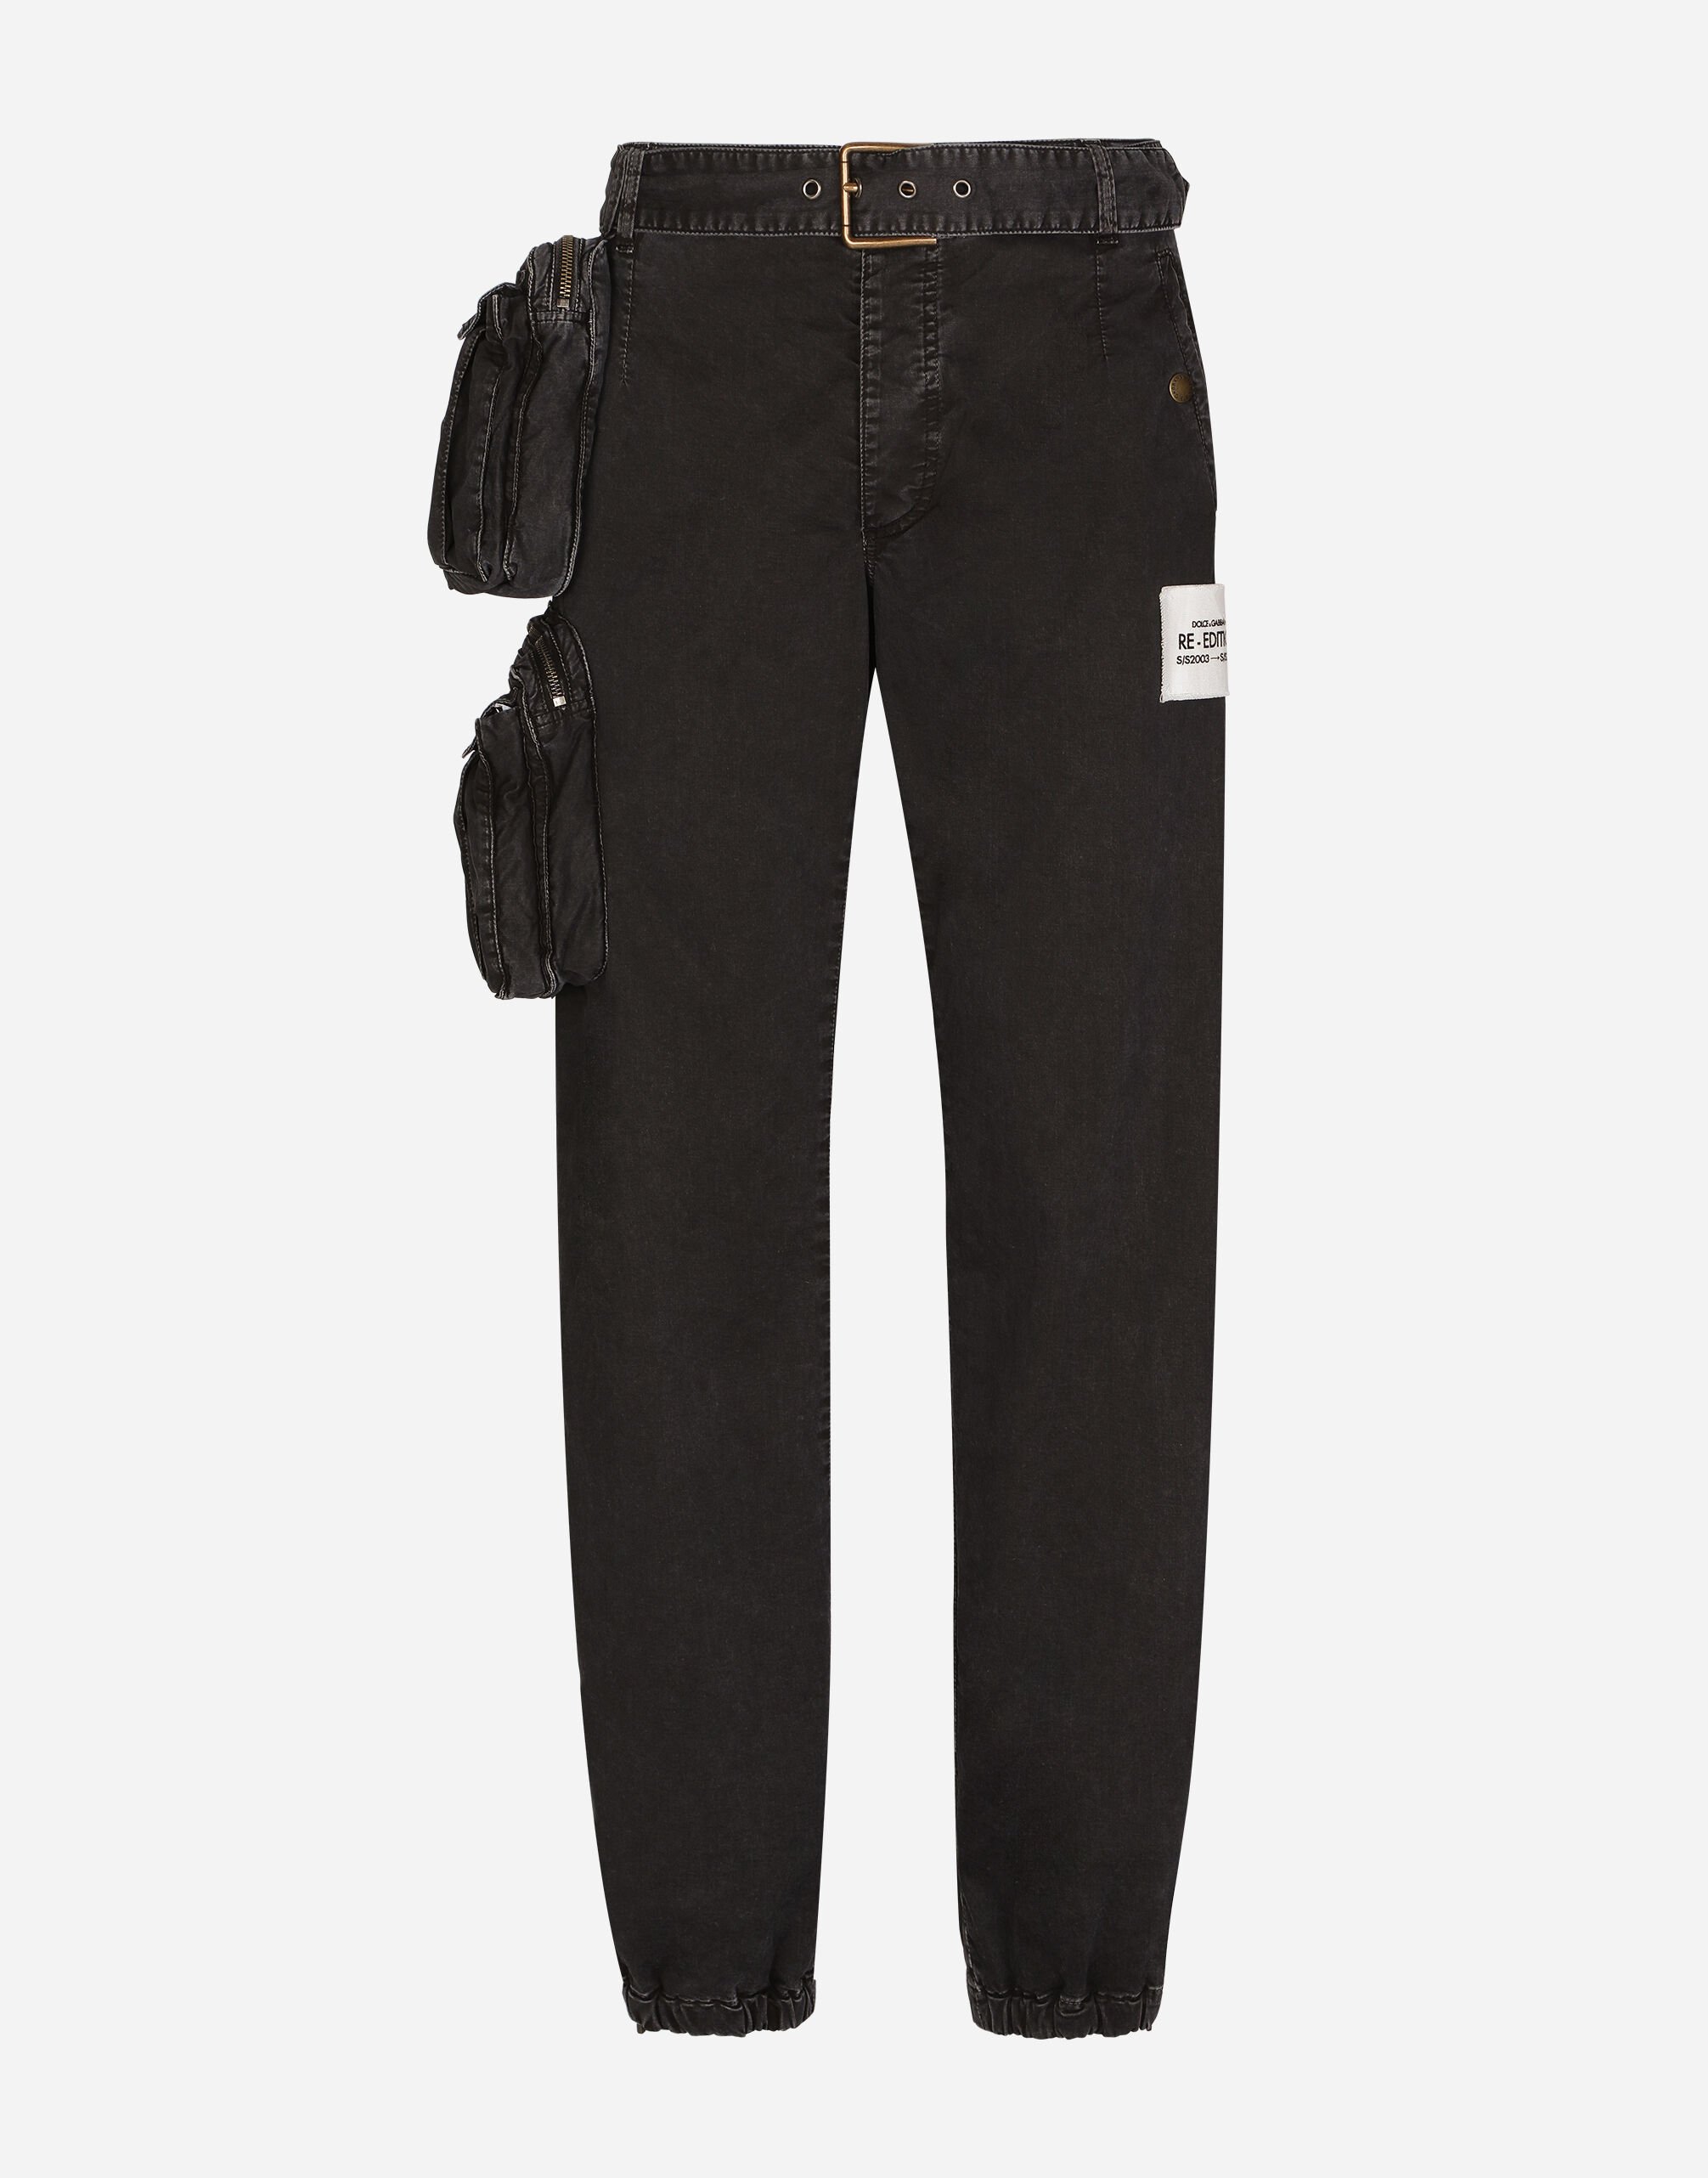 Dolce & Gabbana سروال قطني بحزام وحقيبة خصر متعدد الألوان GV1CXTFU4KJ